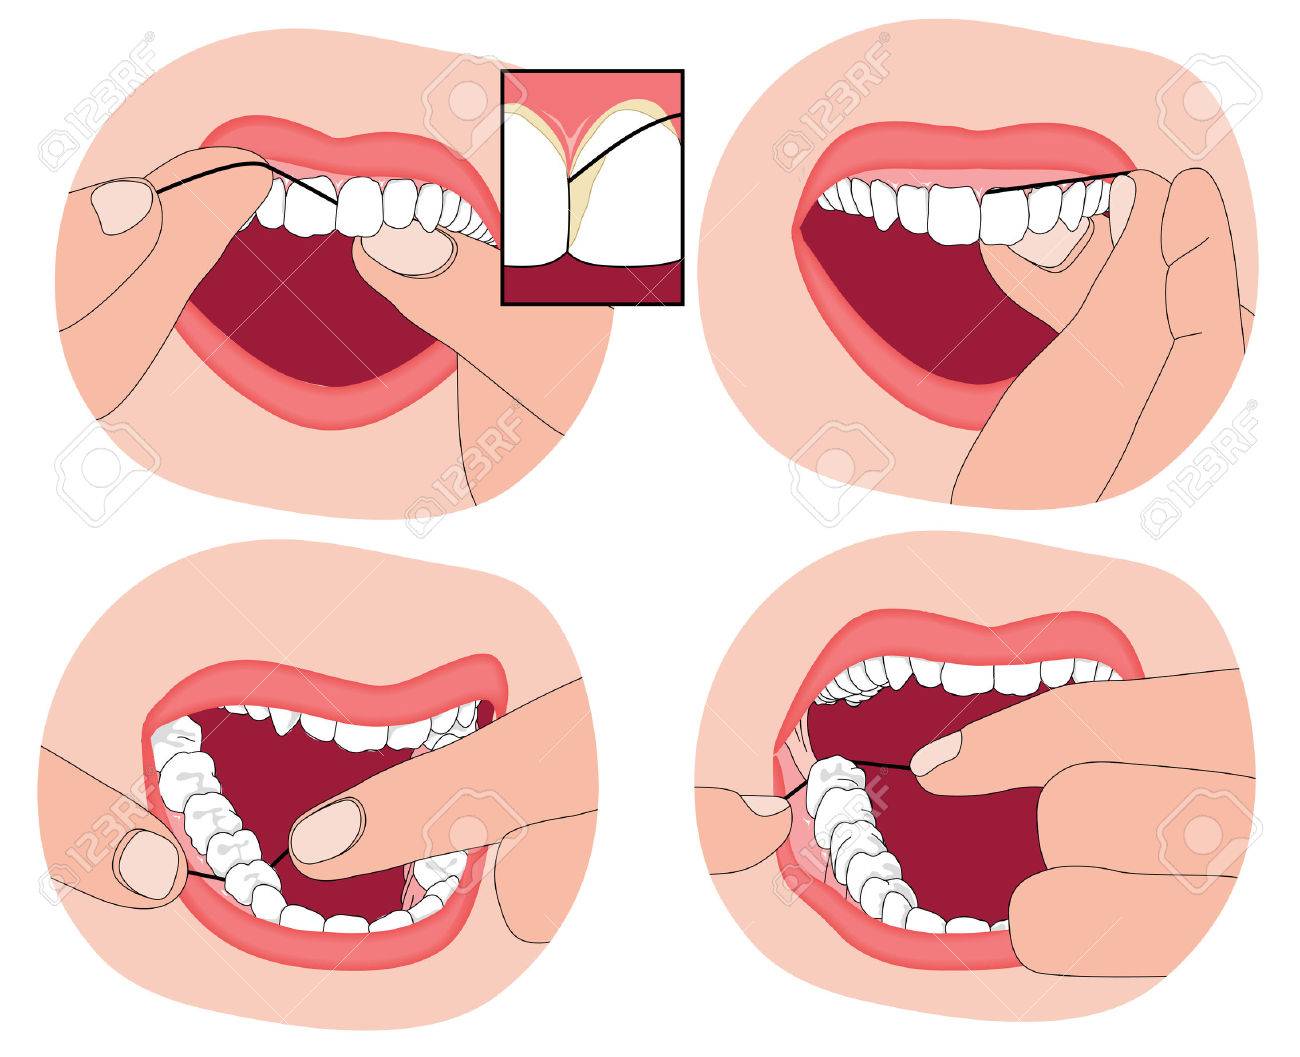 Flossing teeth, showing the floss material between the teeth...